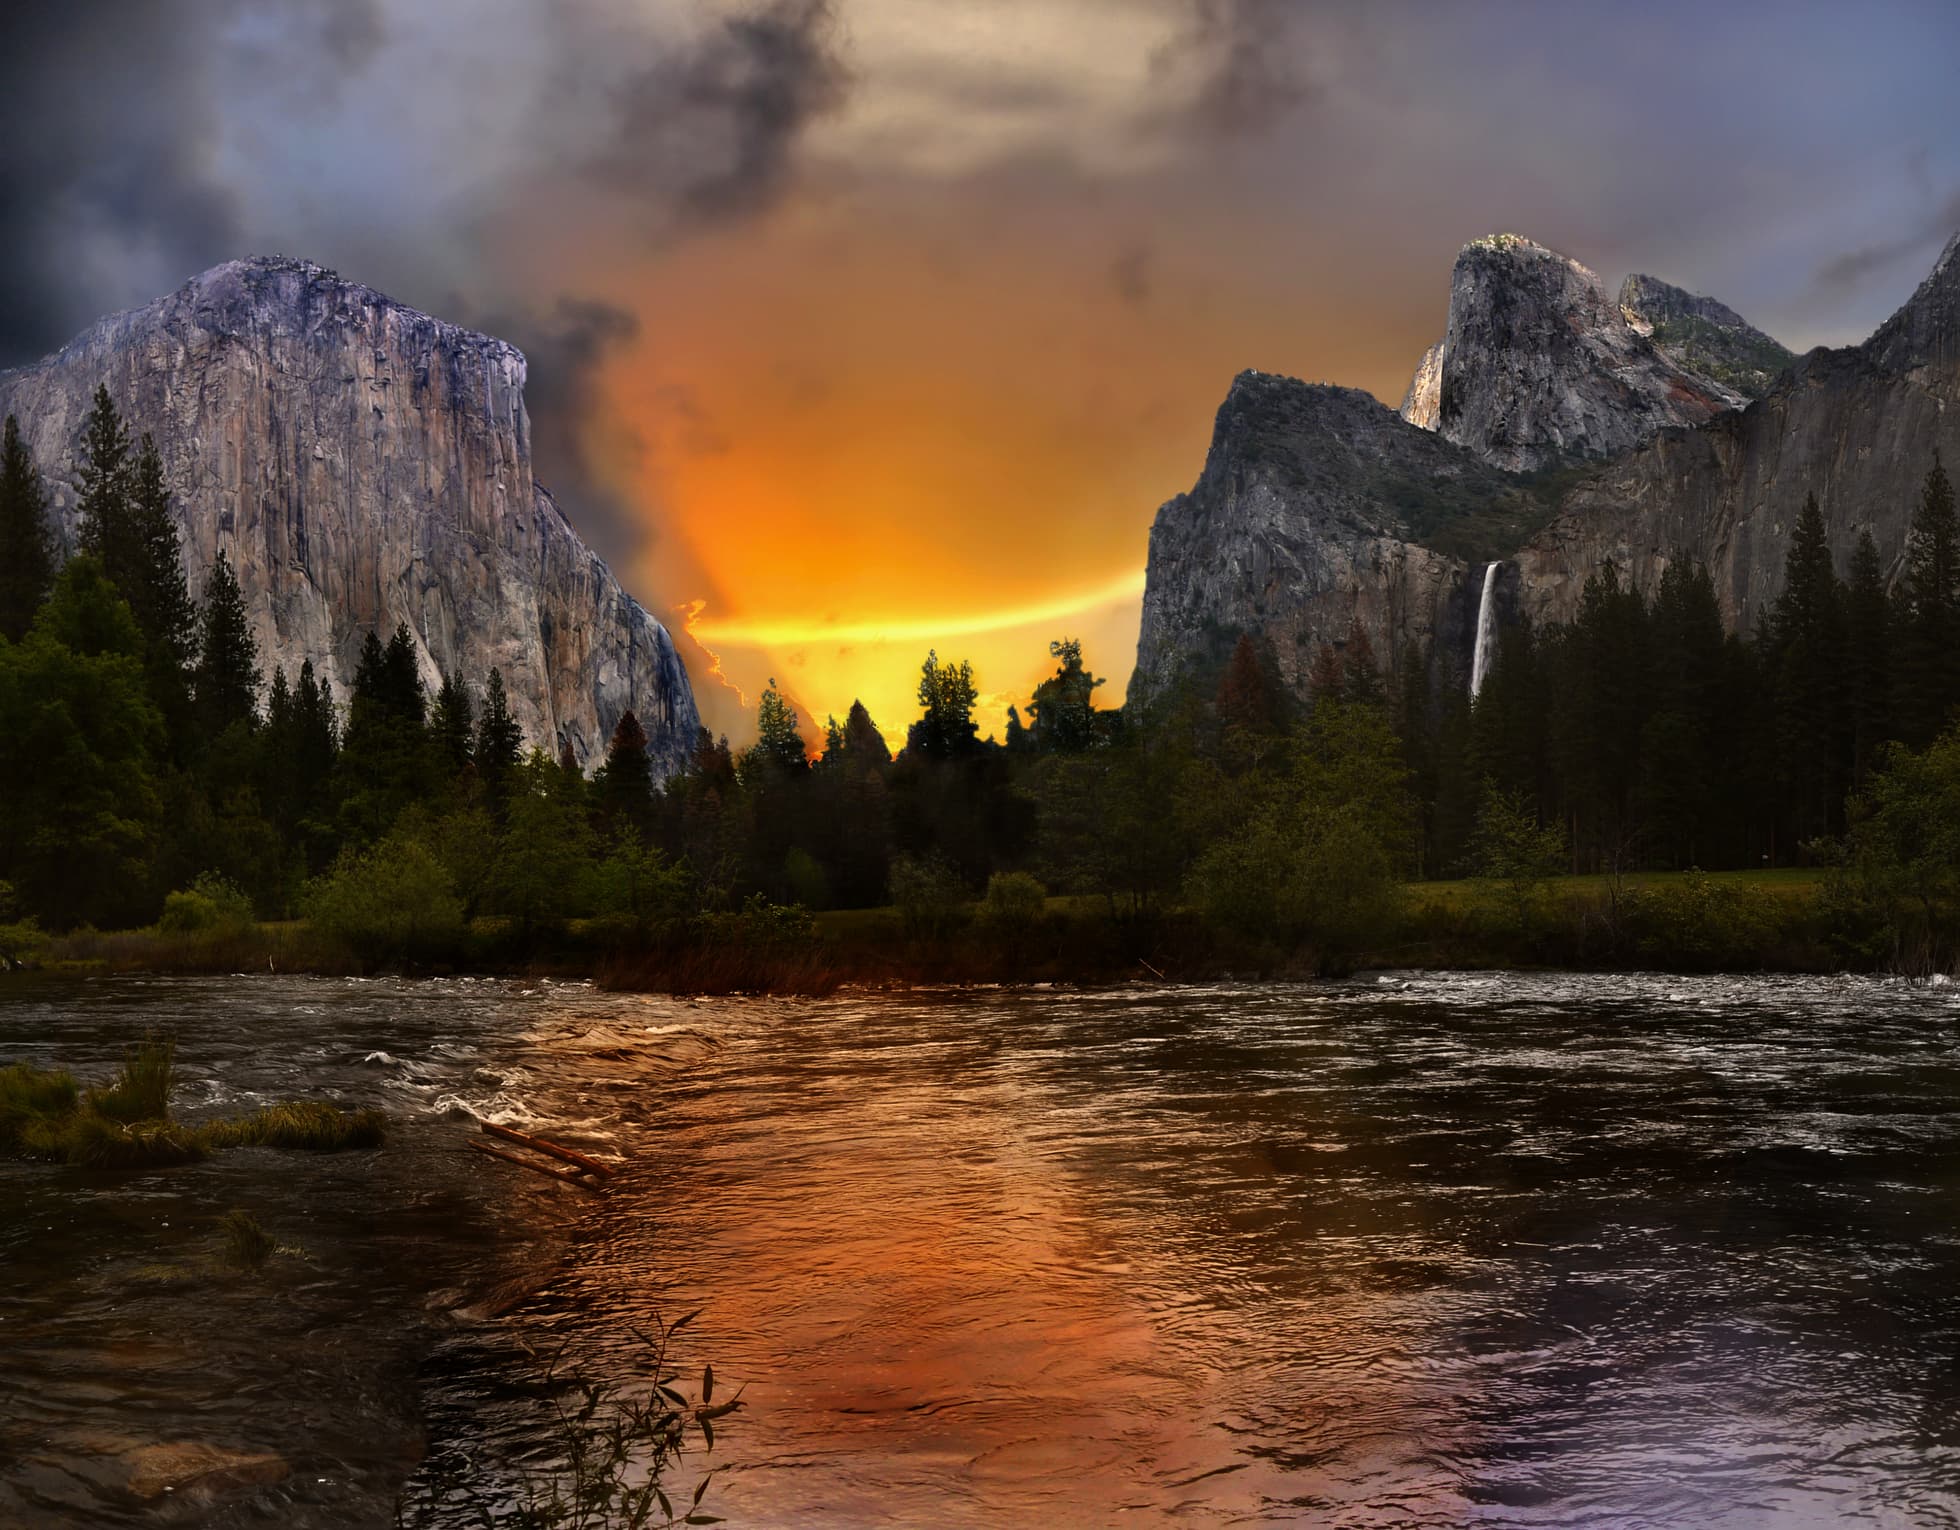 A view of Yosemite at sunset